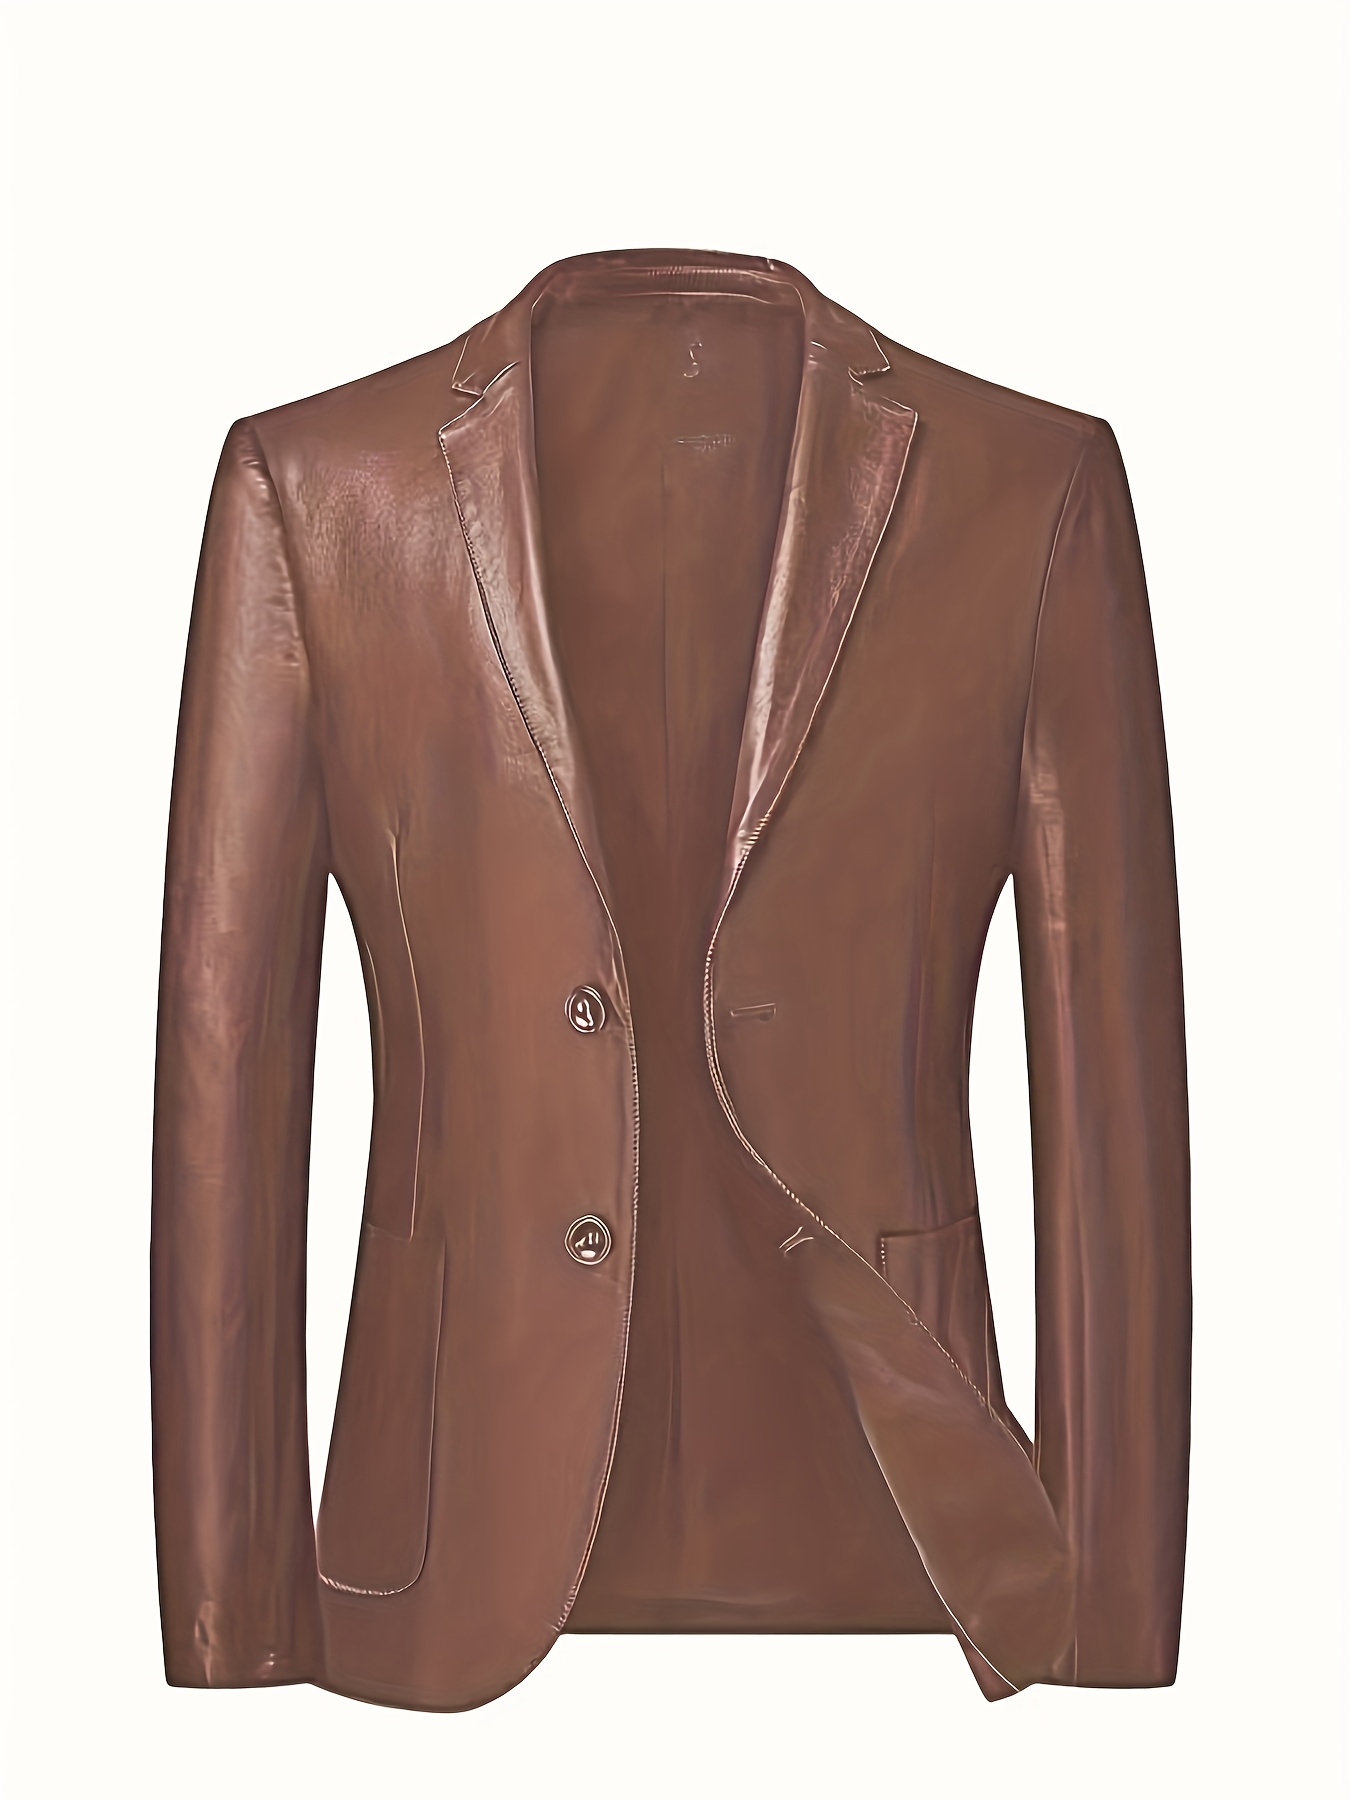 Crocodile brand slim leather jacket coat Men Business Casual Autumn winter  new Dress windbreaker mens Blazer faux leather jacket